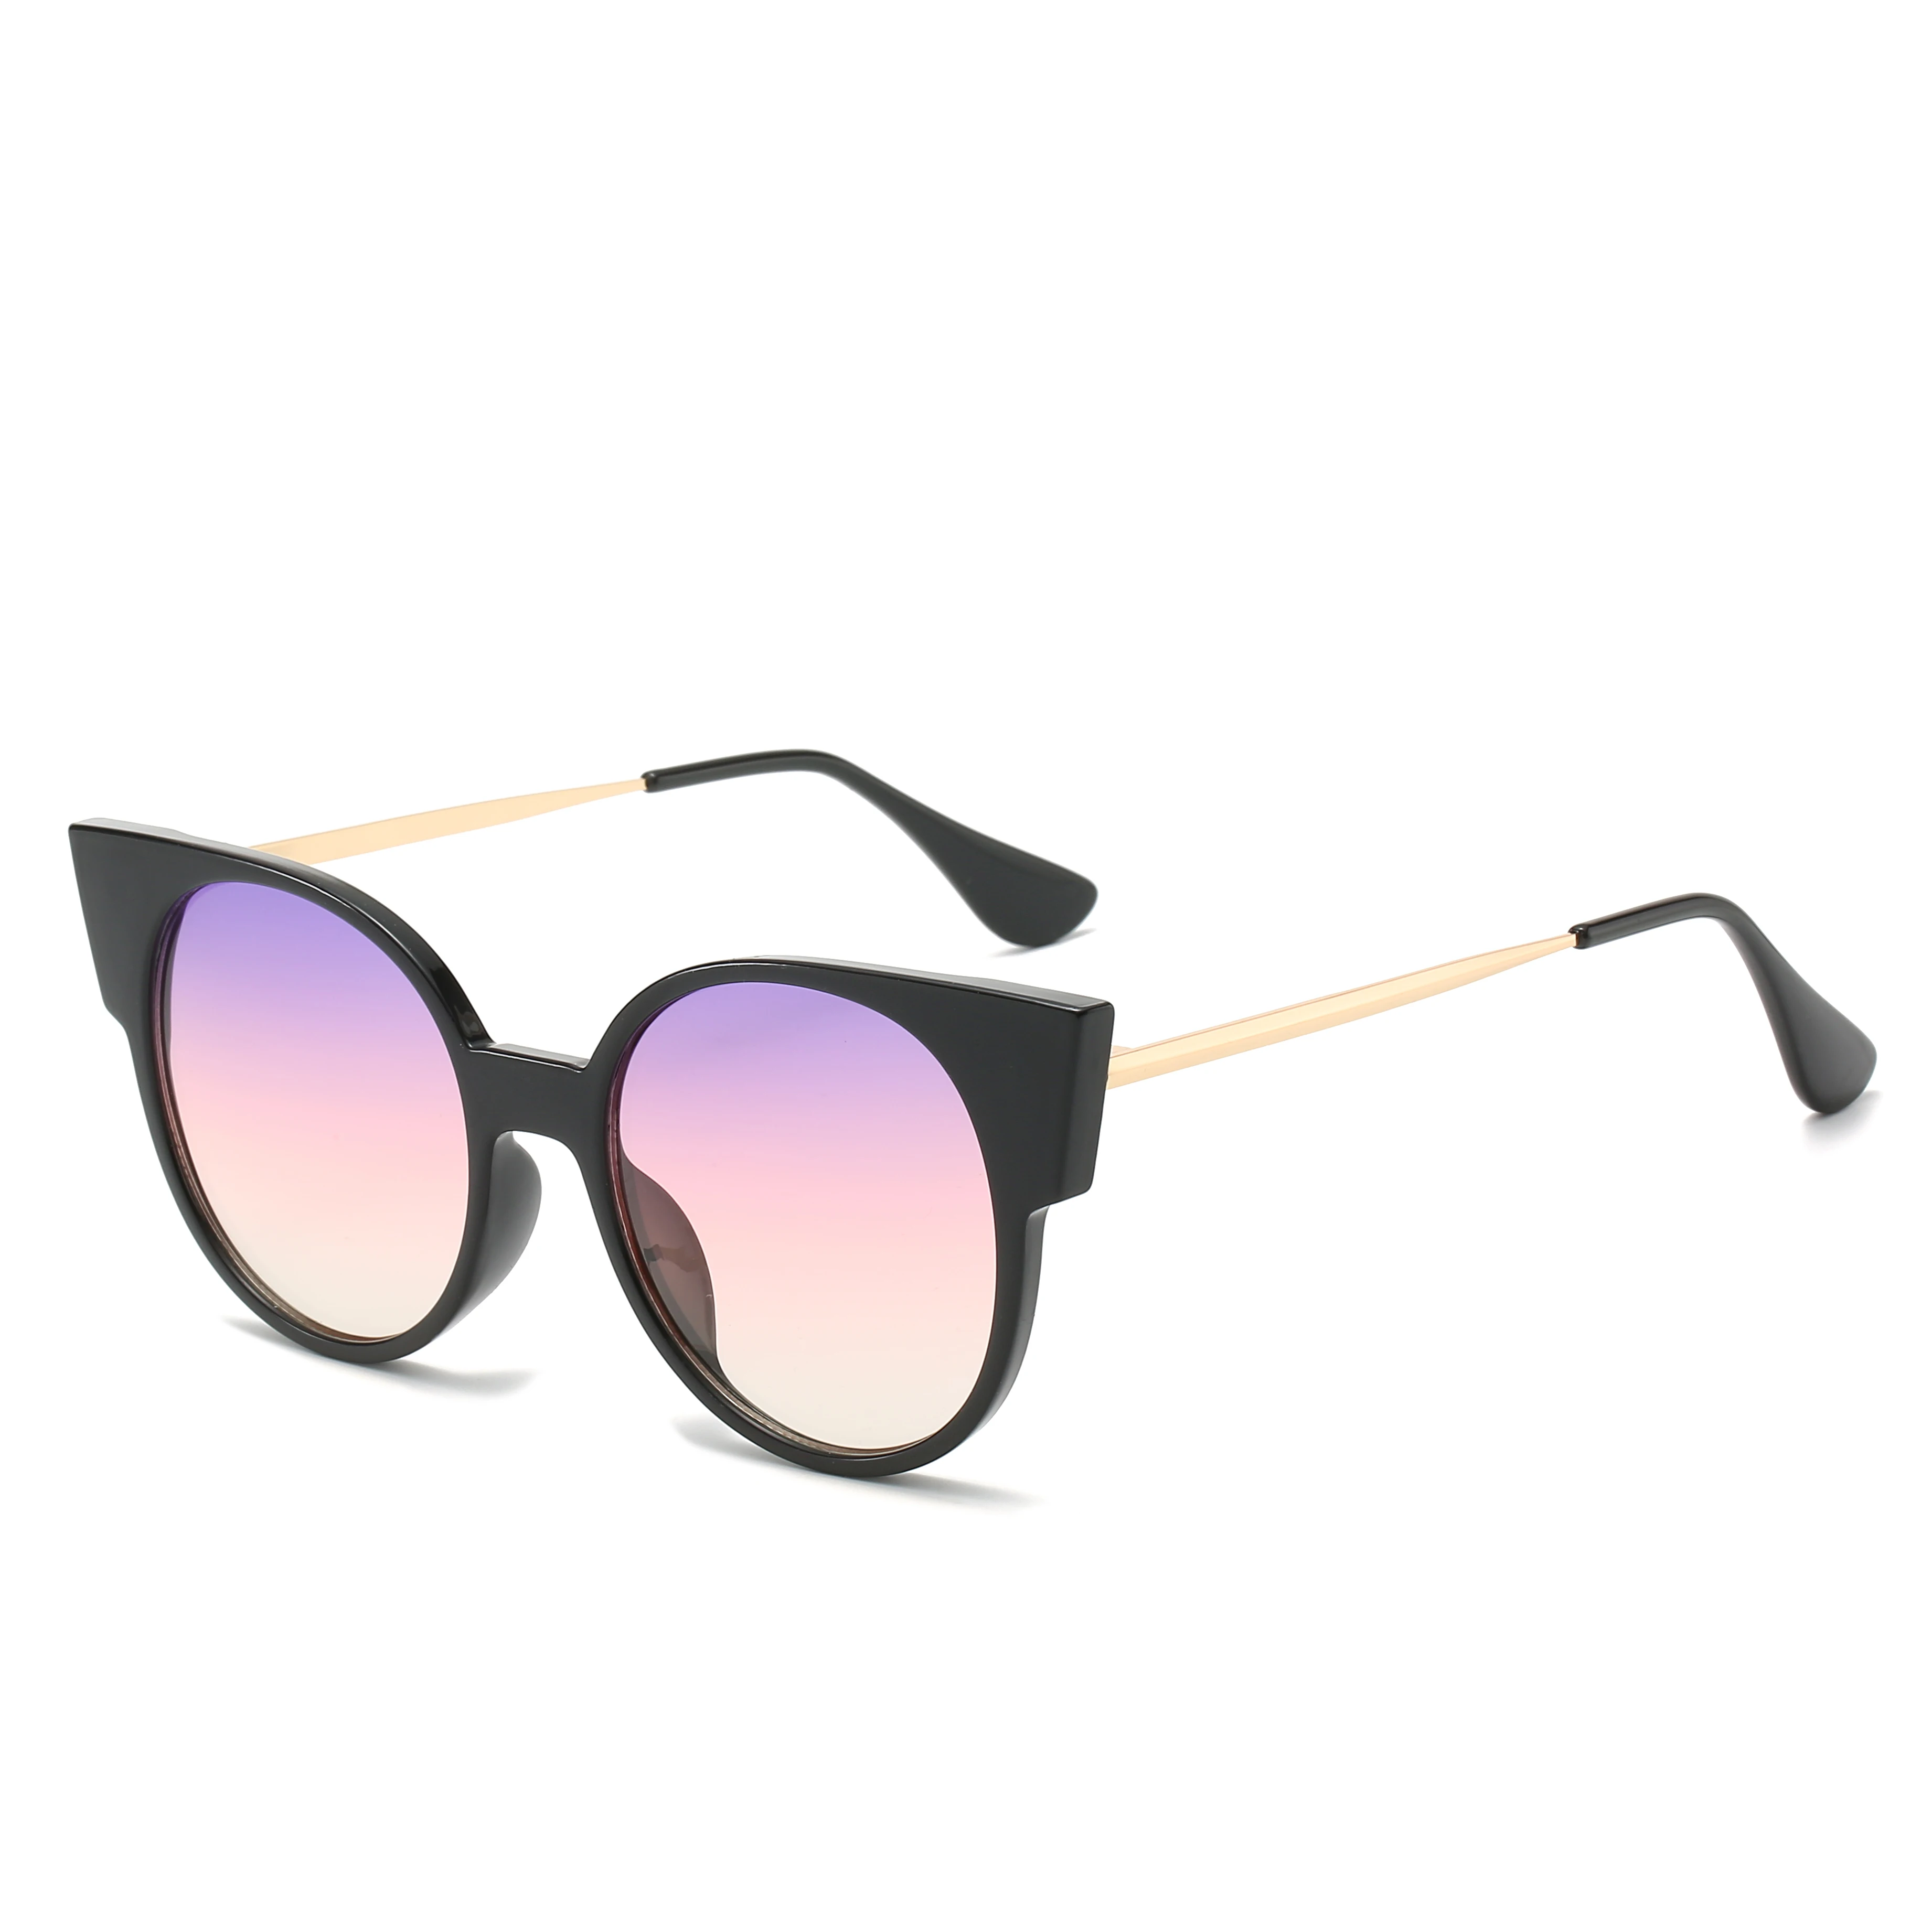 

Banei Sun Glasses Novelty Metal Designer Unique Shades Unisex Vintage 2020 New Arrivals Personalized Sunglasses Shades